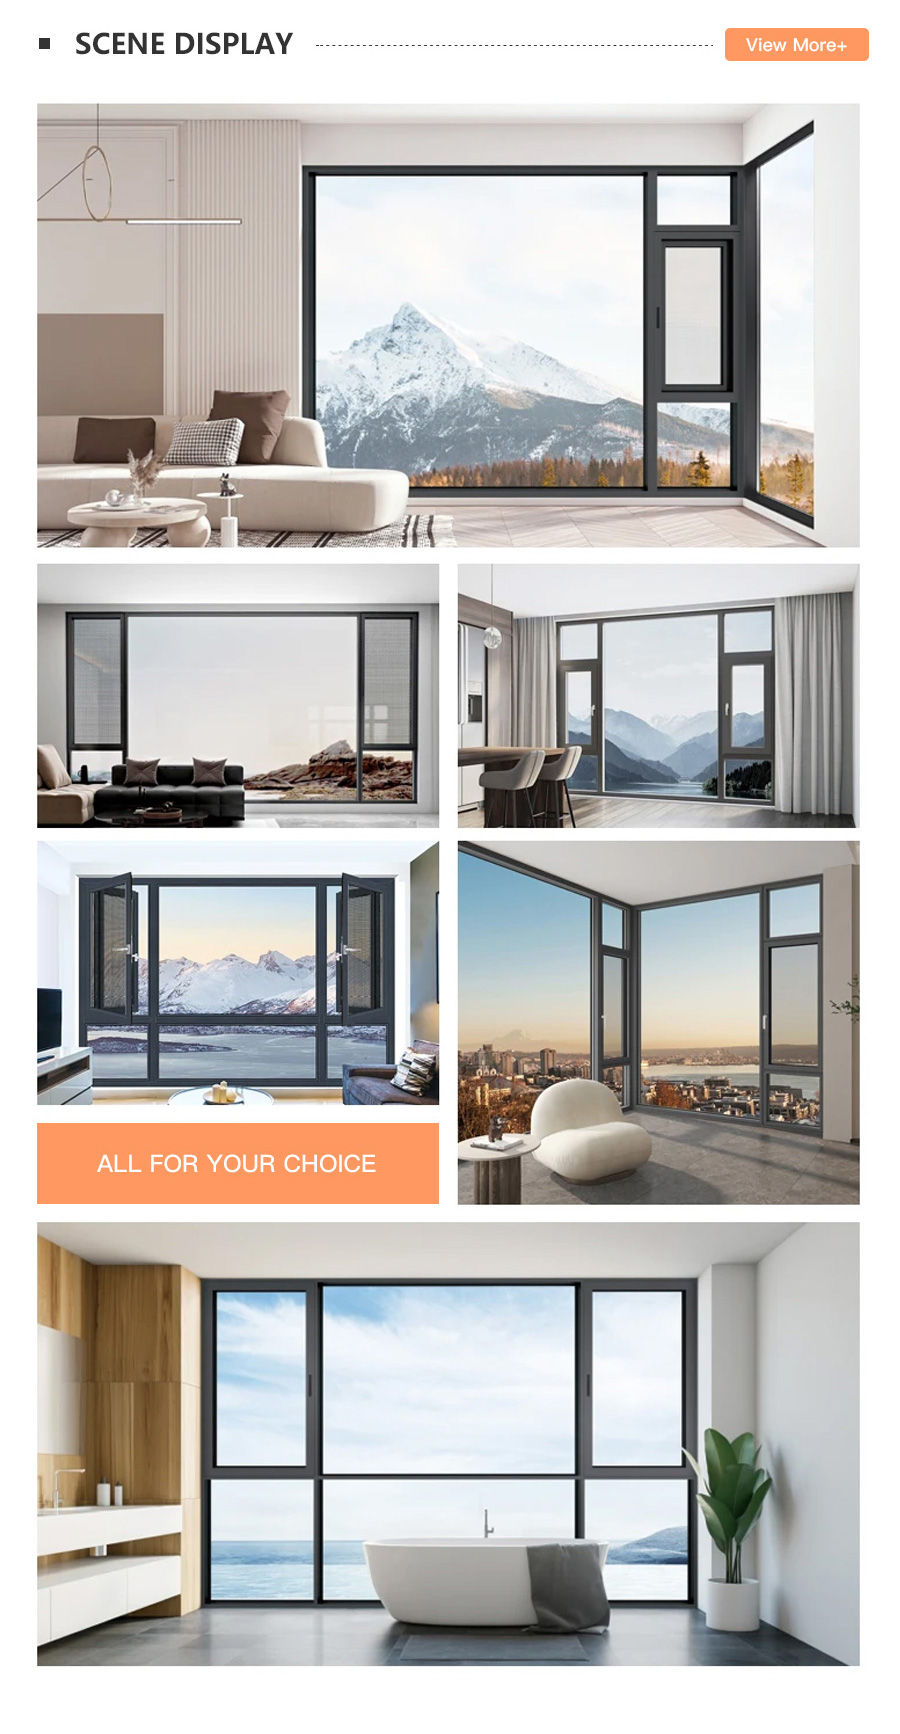 Presentation of Kanod aluminum casement windows in households